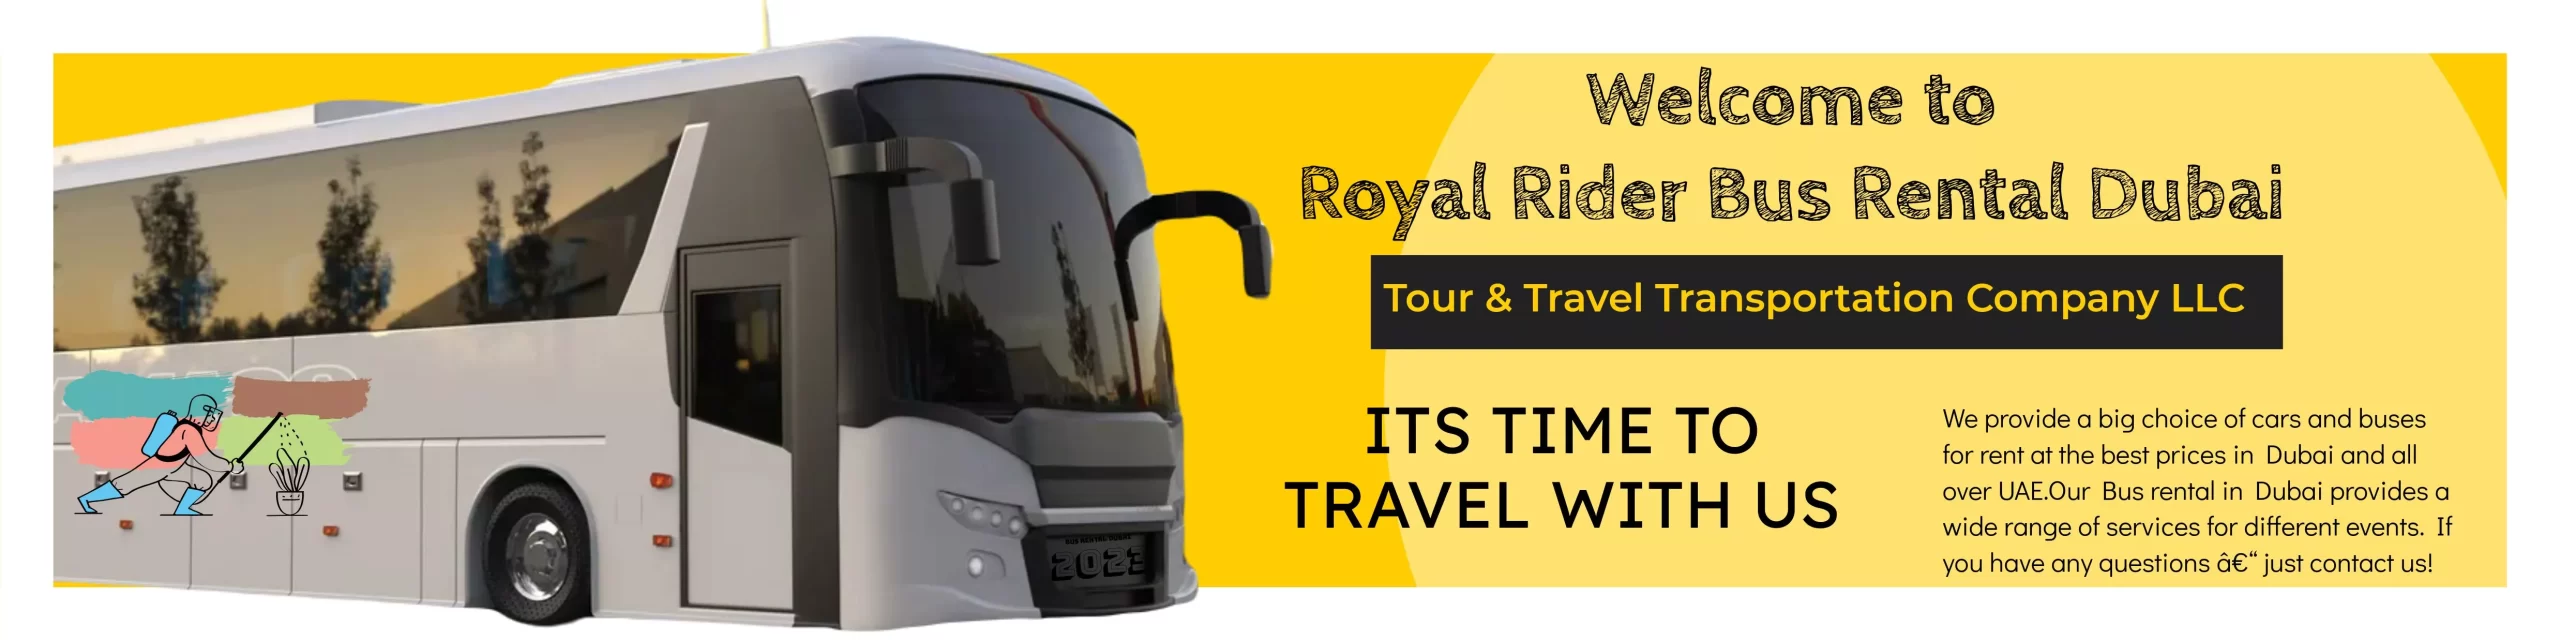 royal-rider-bus-rental-Dubai-services